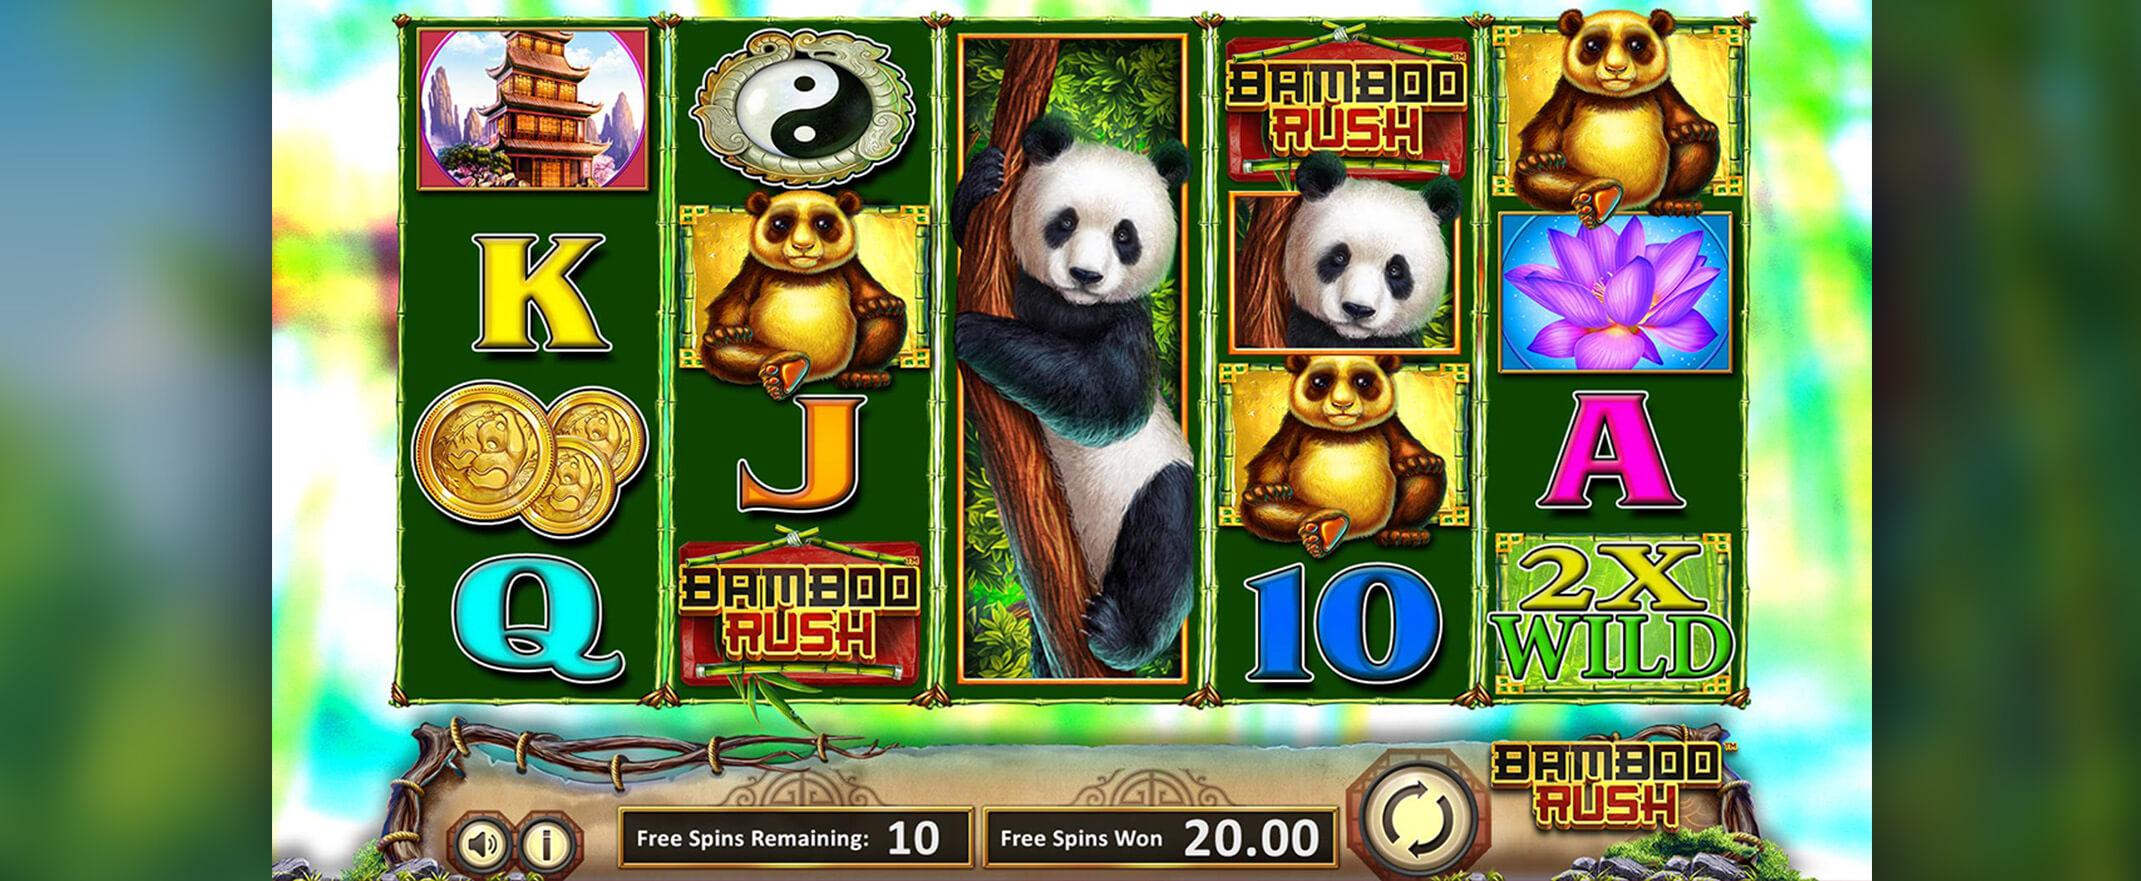 Bamboo Rush peliautomaatti Betsoftilta